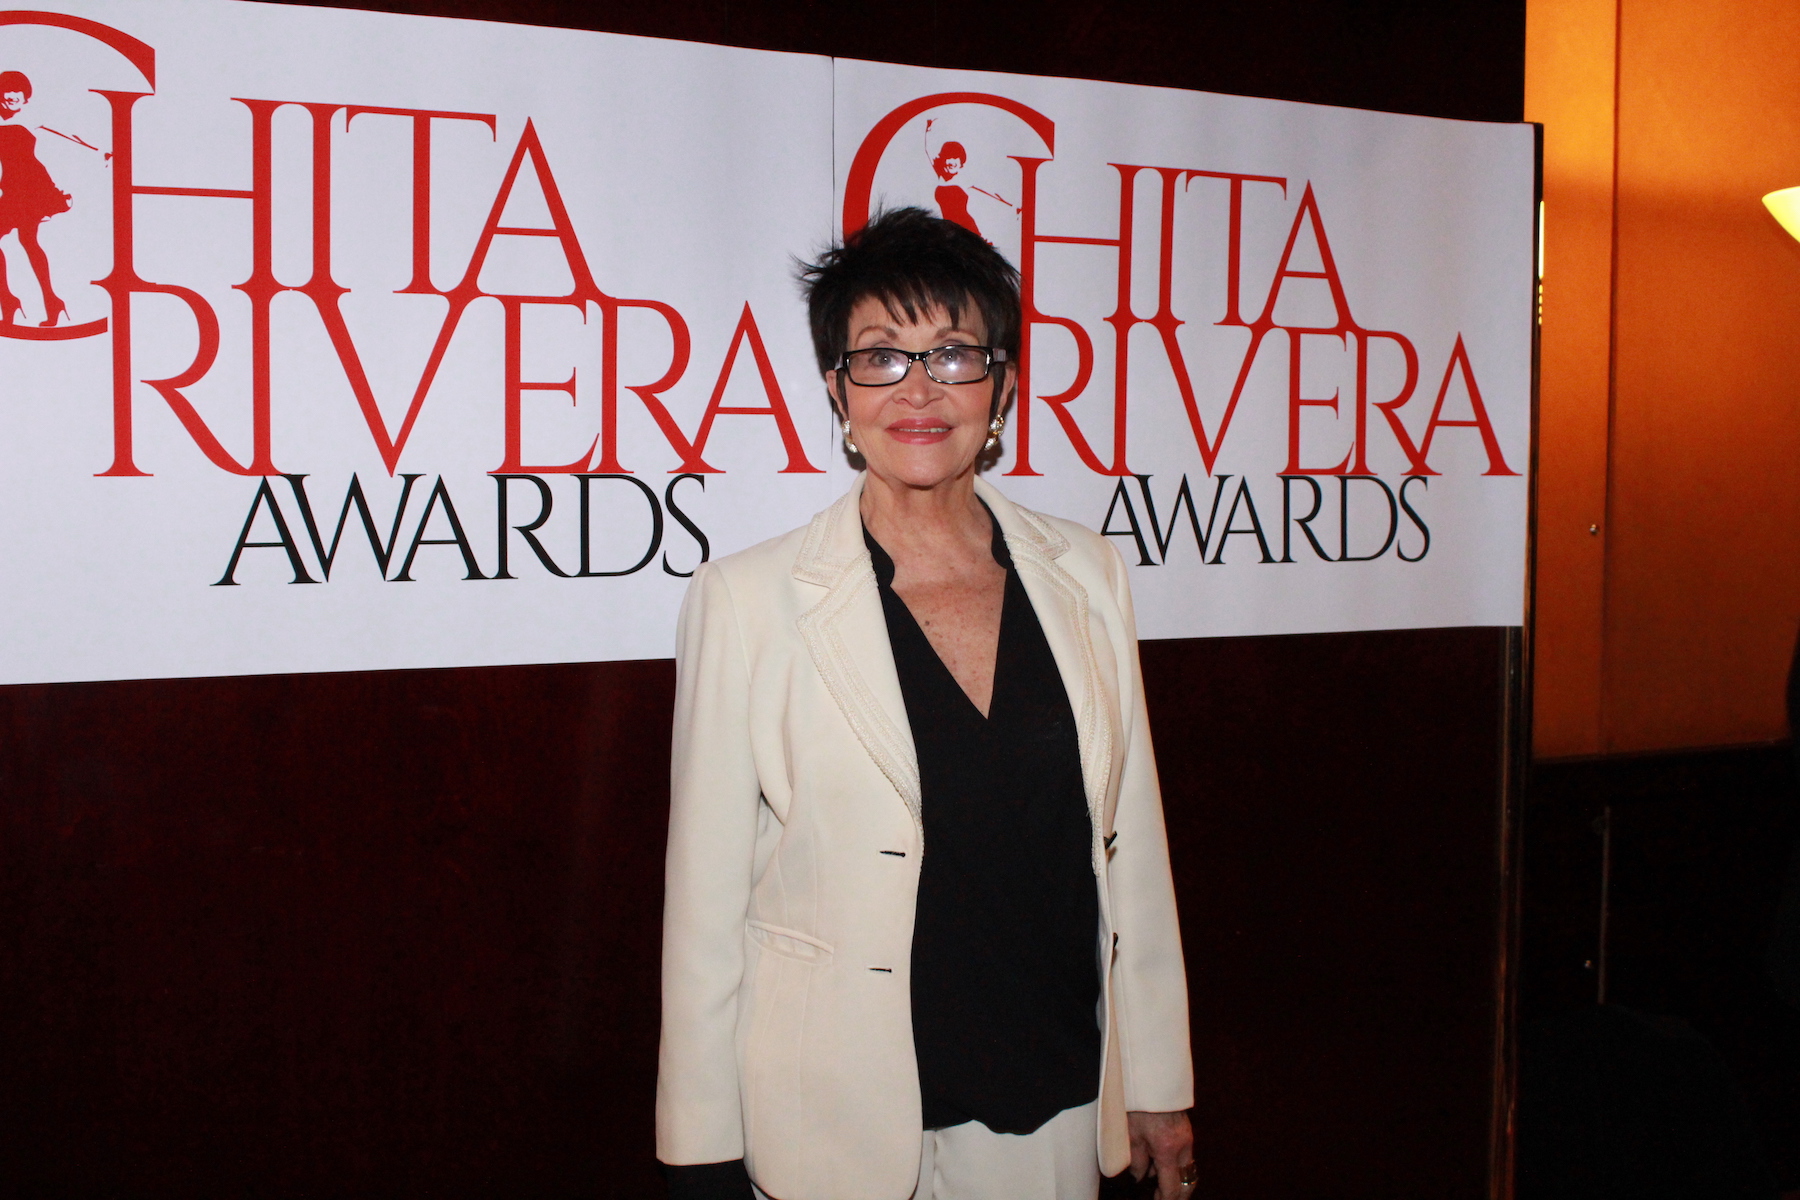 Chita Rivera Awards Noms Announced